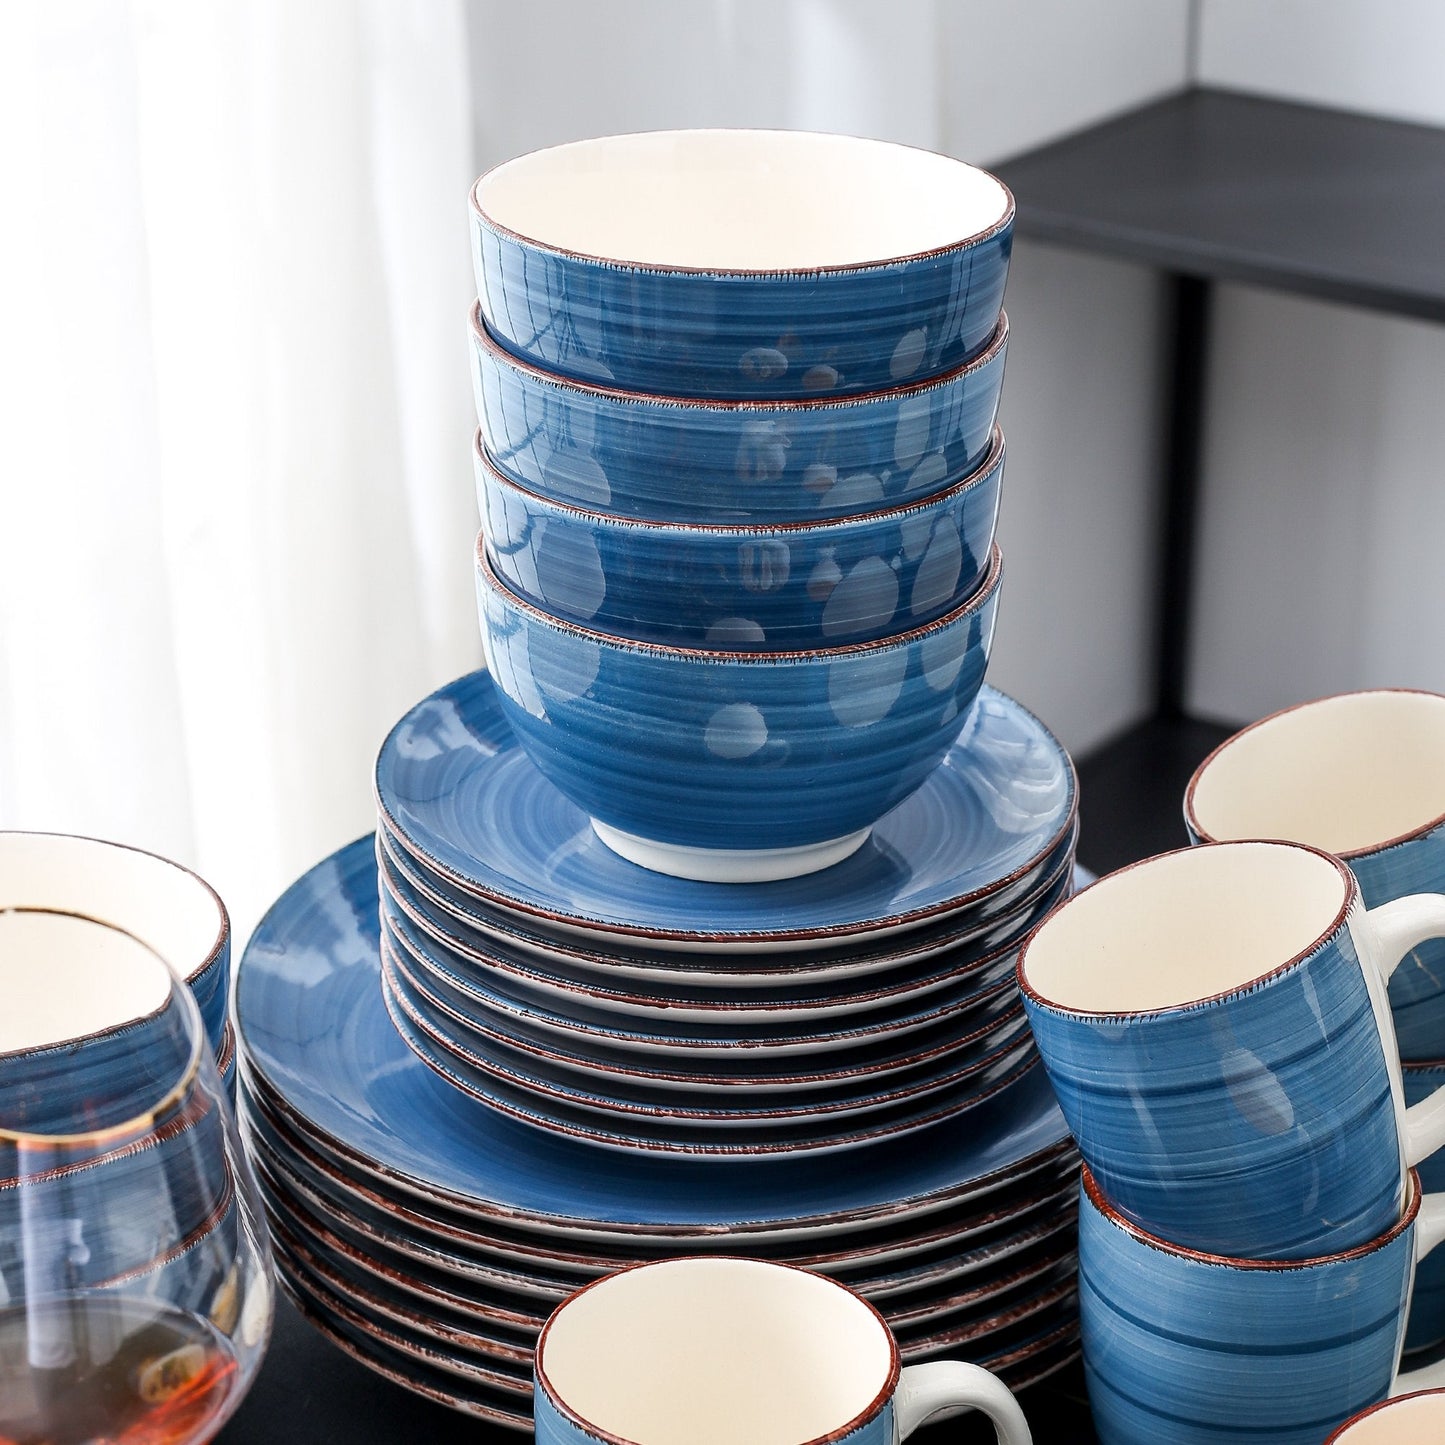 Bella 32-Pieces Porcelain Dinner Set - Nordic Side - 32, Bella, Ceramic, Dinner, Look, Pieces, Plate, PlateBowlMug, PlateDessert, Porcelain, Set, Vancasso, Vintage, with